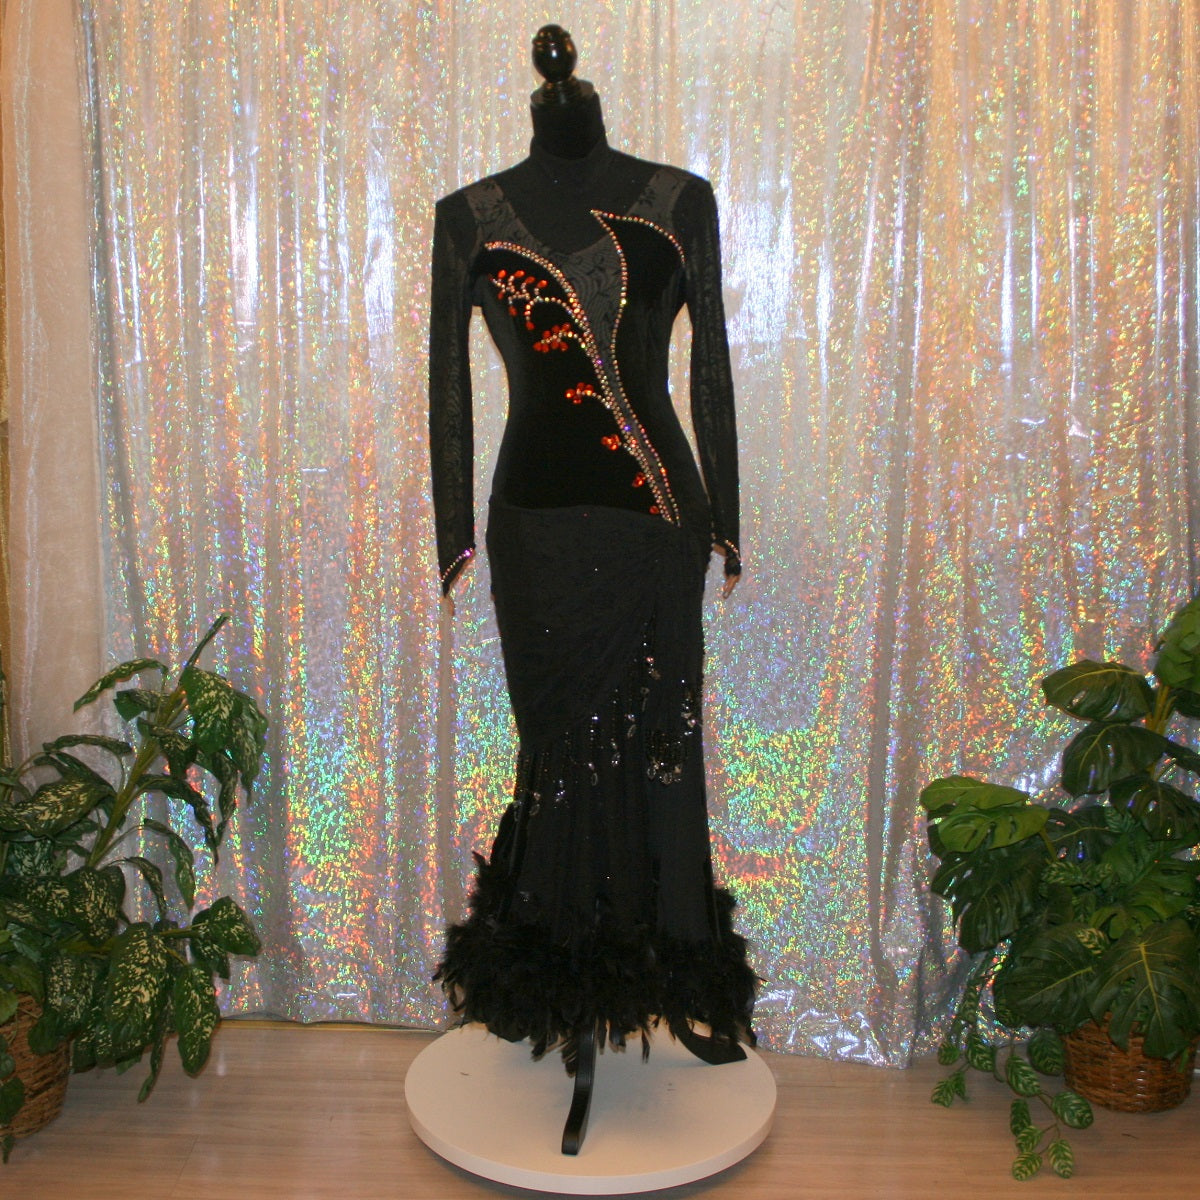 Black Ballroom Dress with Orange Accents & Black Feathers on Sale-Contessa